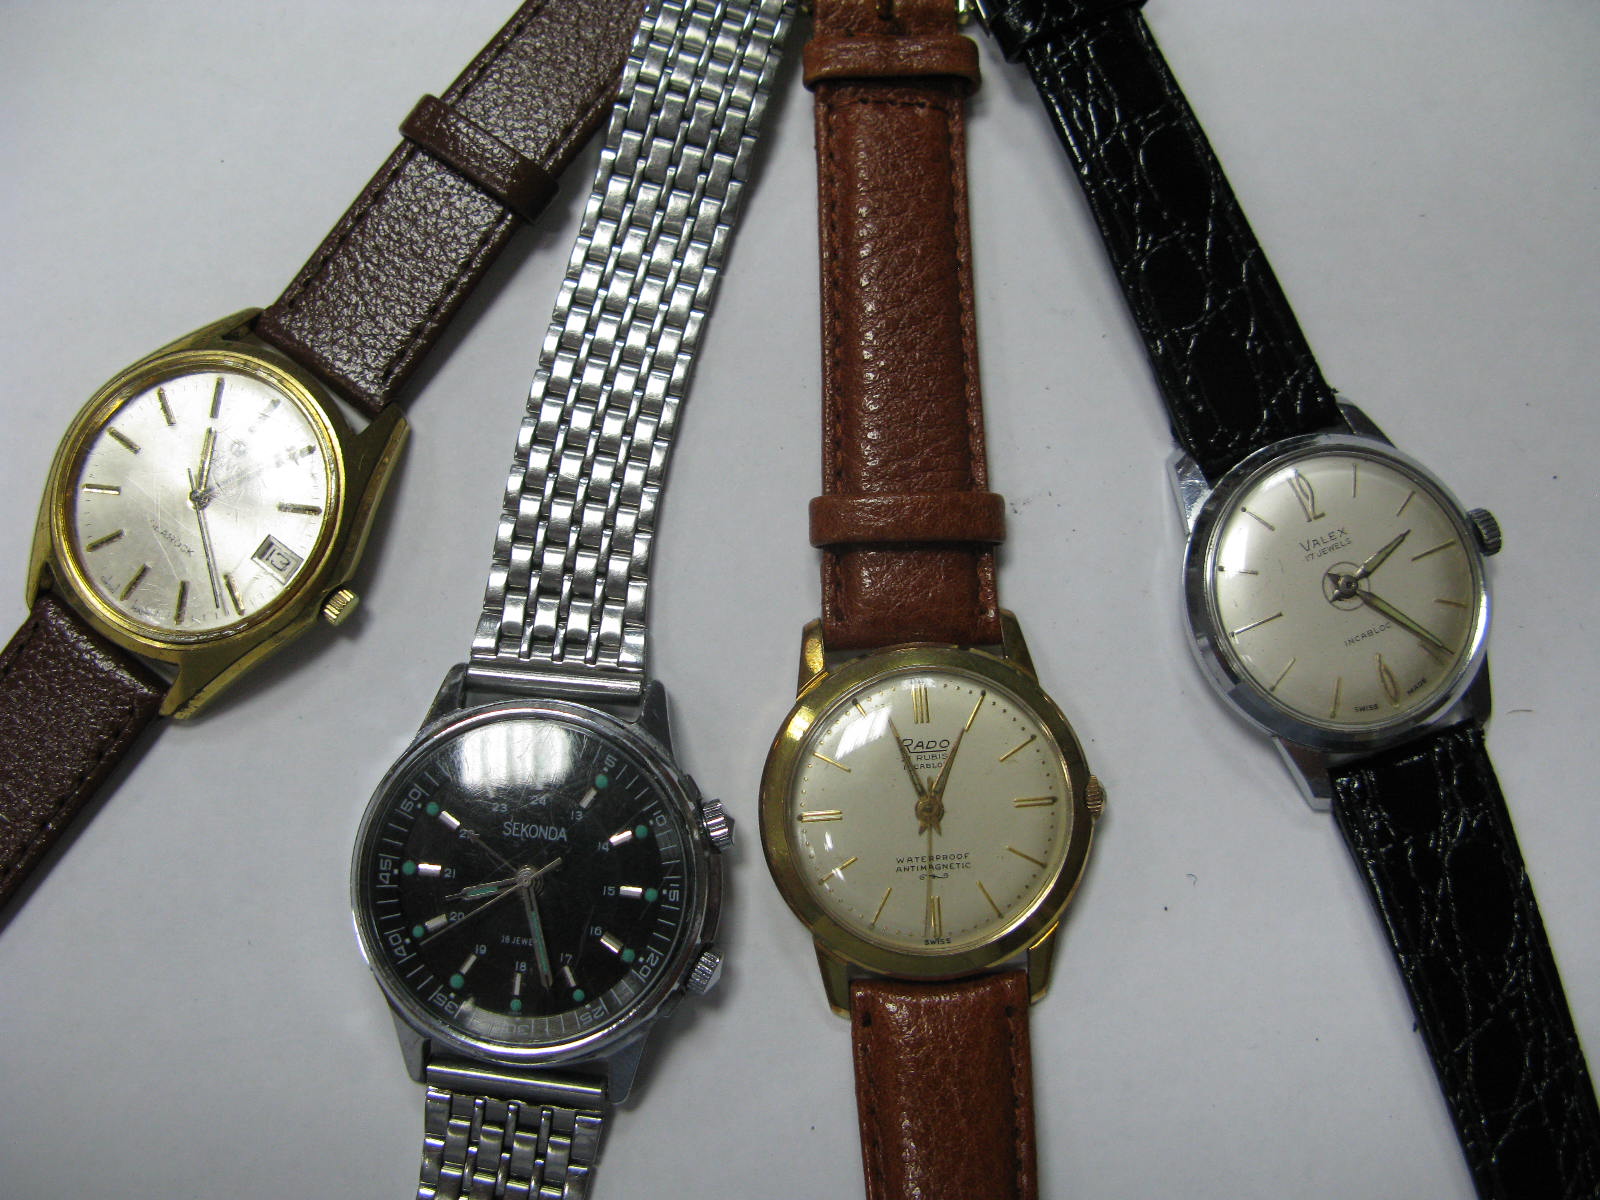 A Sekonda Alarm Gents Wristwatch, Rado, Valer and Roamer mechanical wristwatches (4)